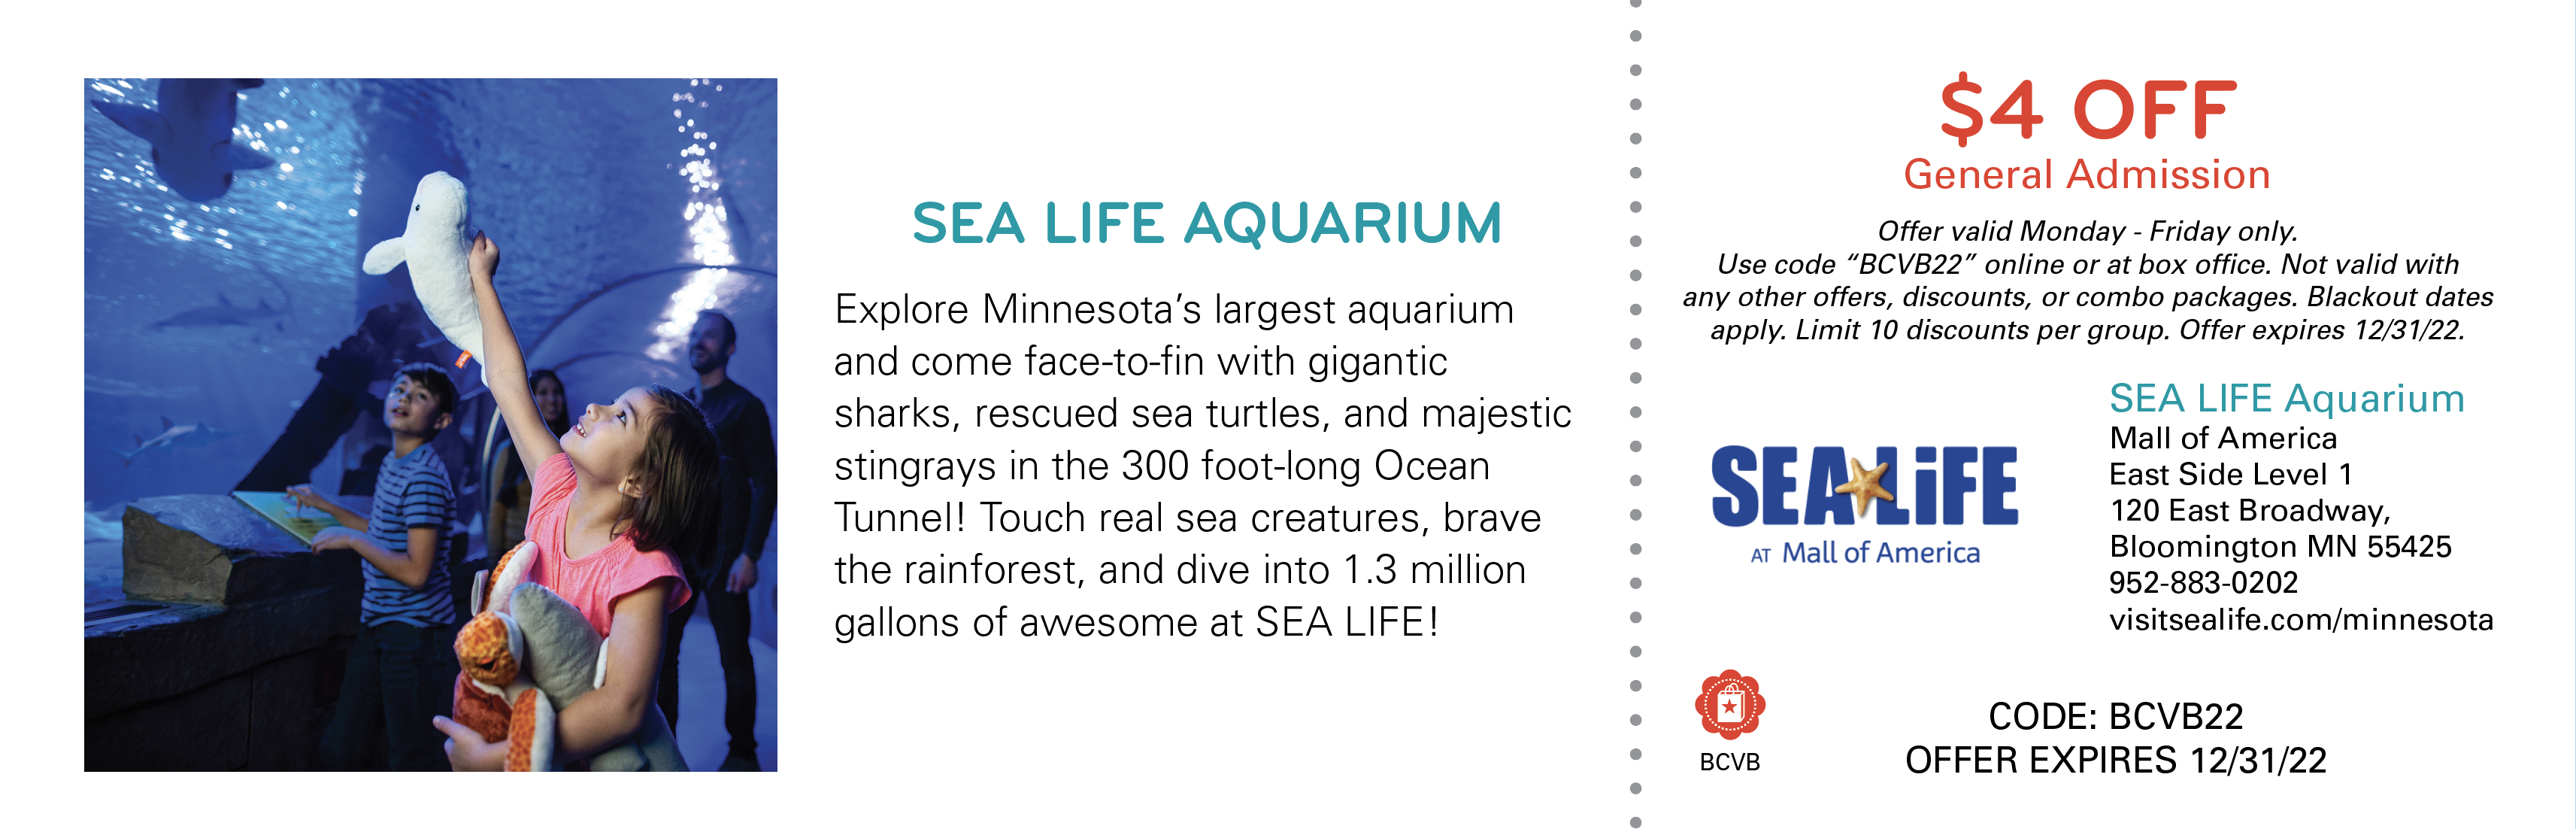 Sea Life MN Aquarium Coupon